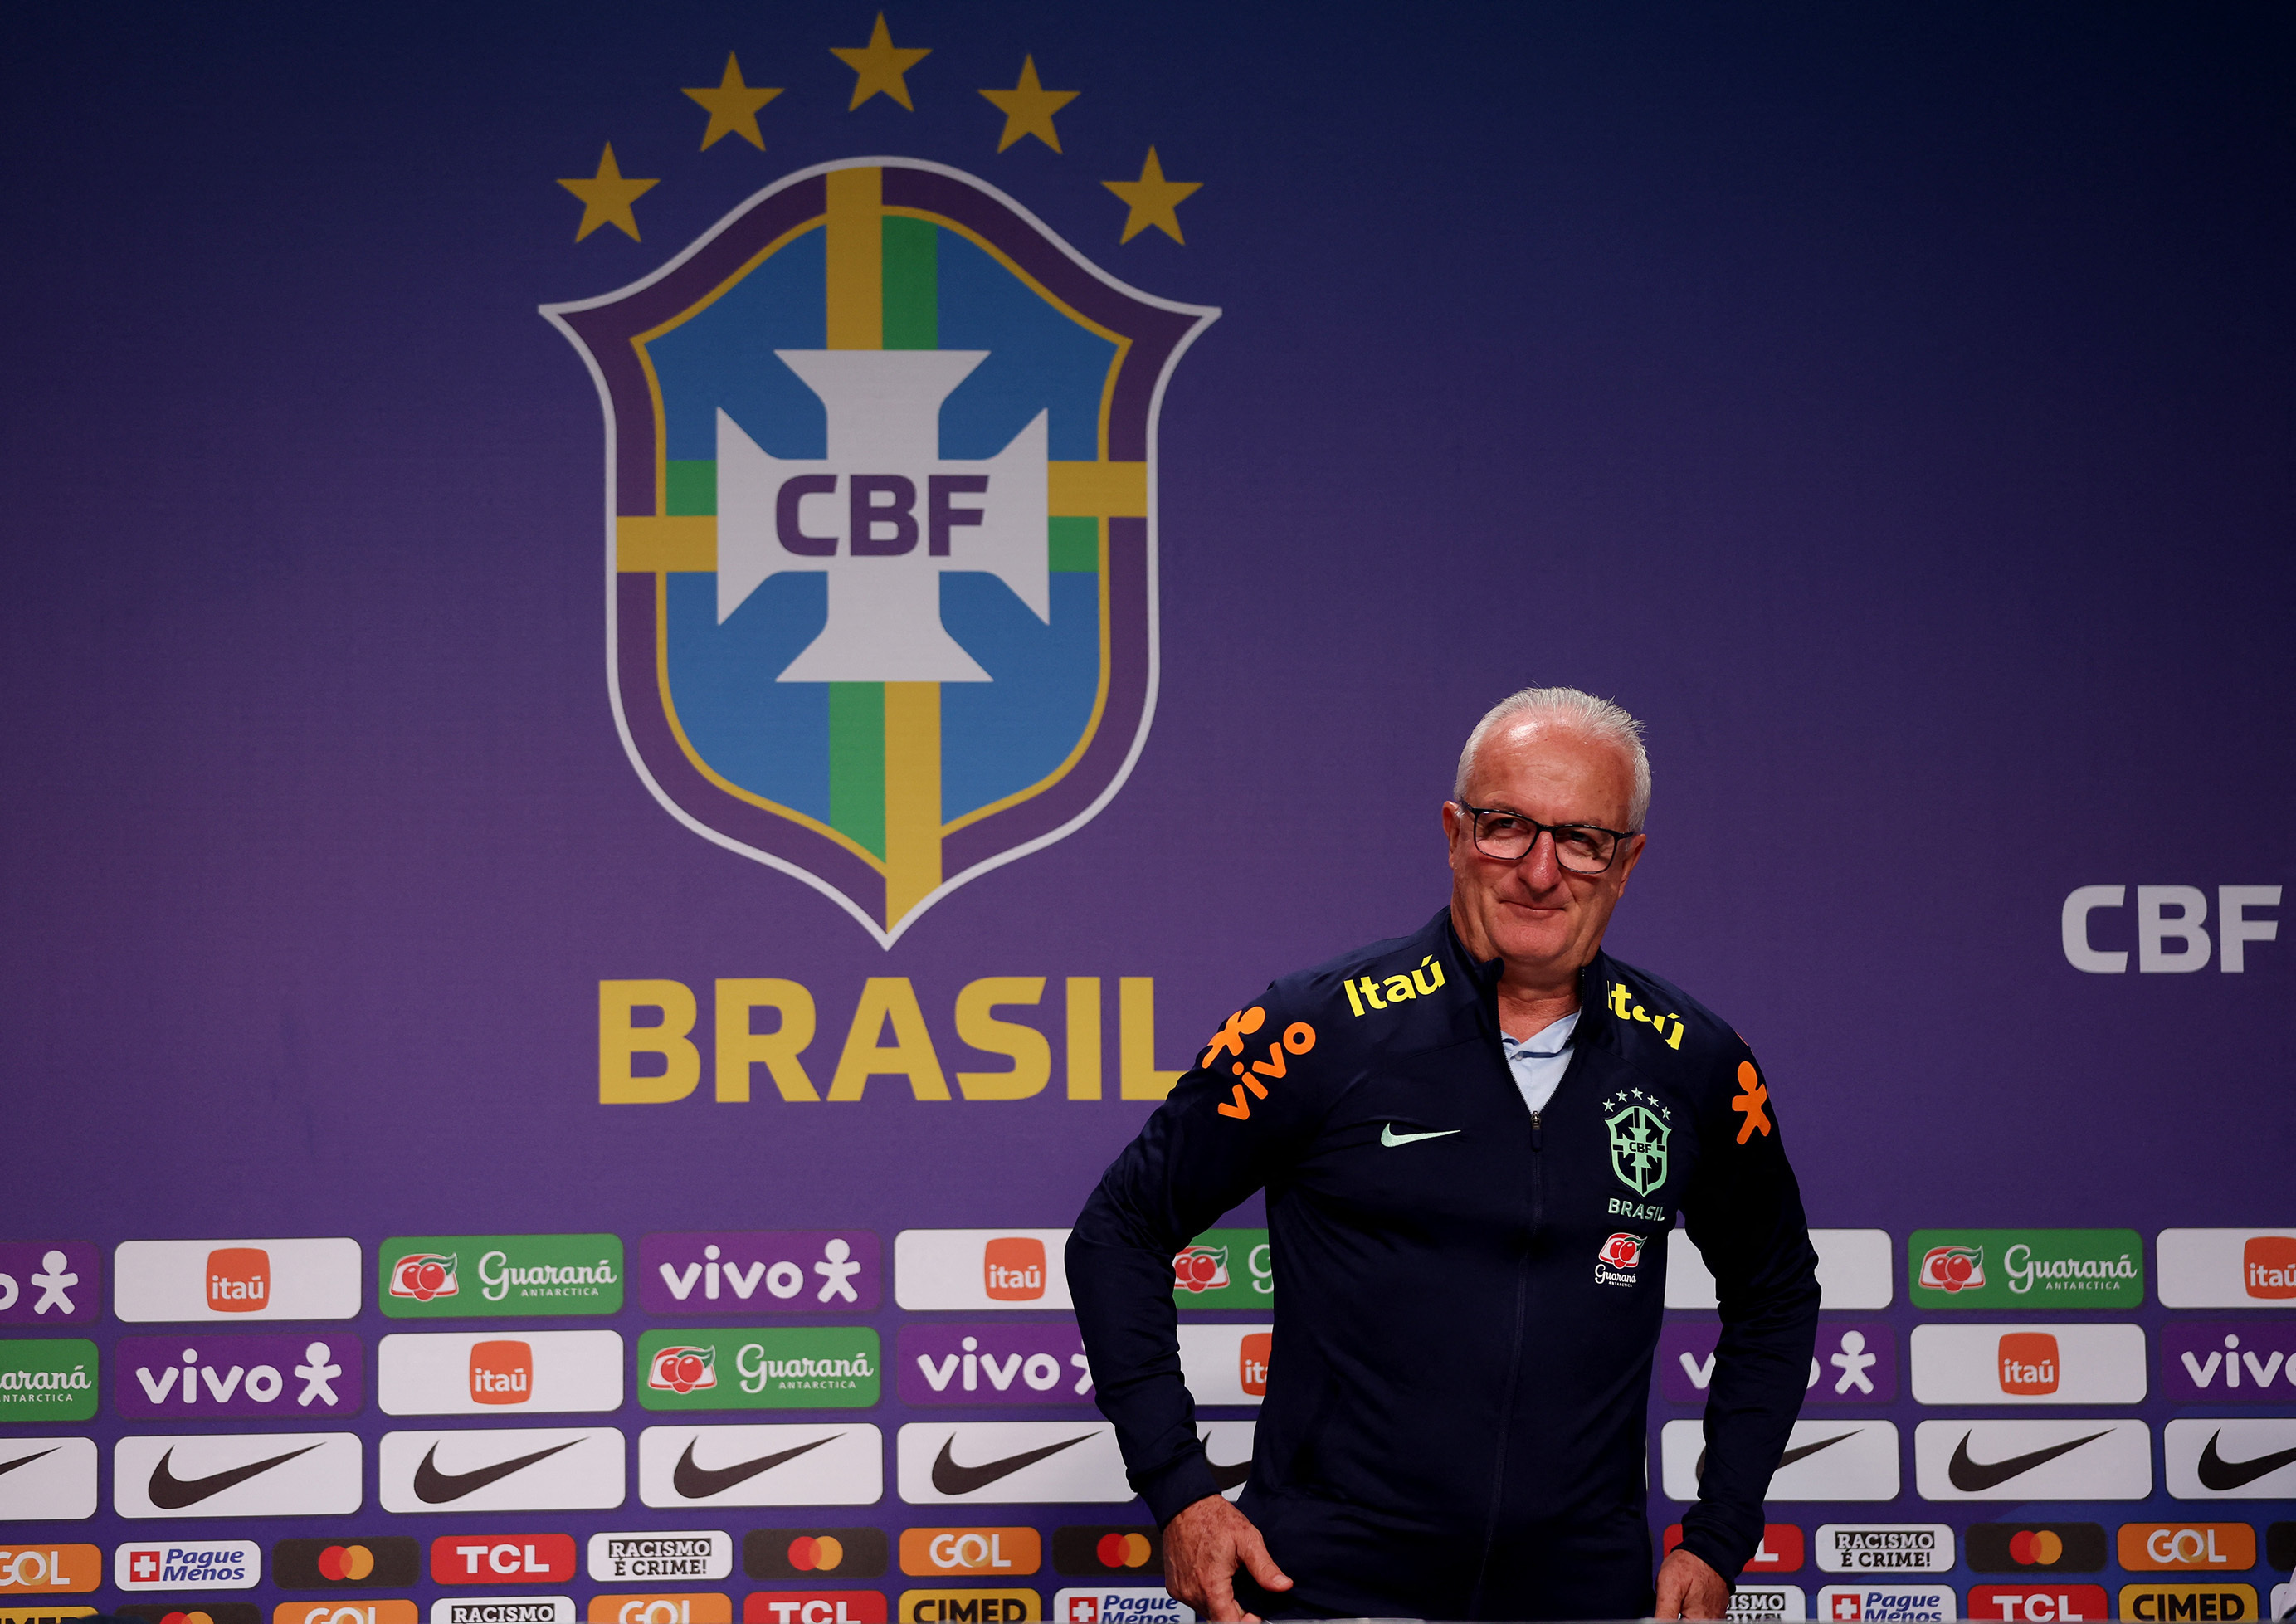 Dorival Junior promises to turn Brazil's plight around